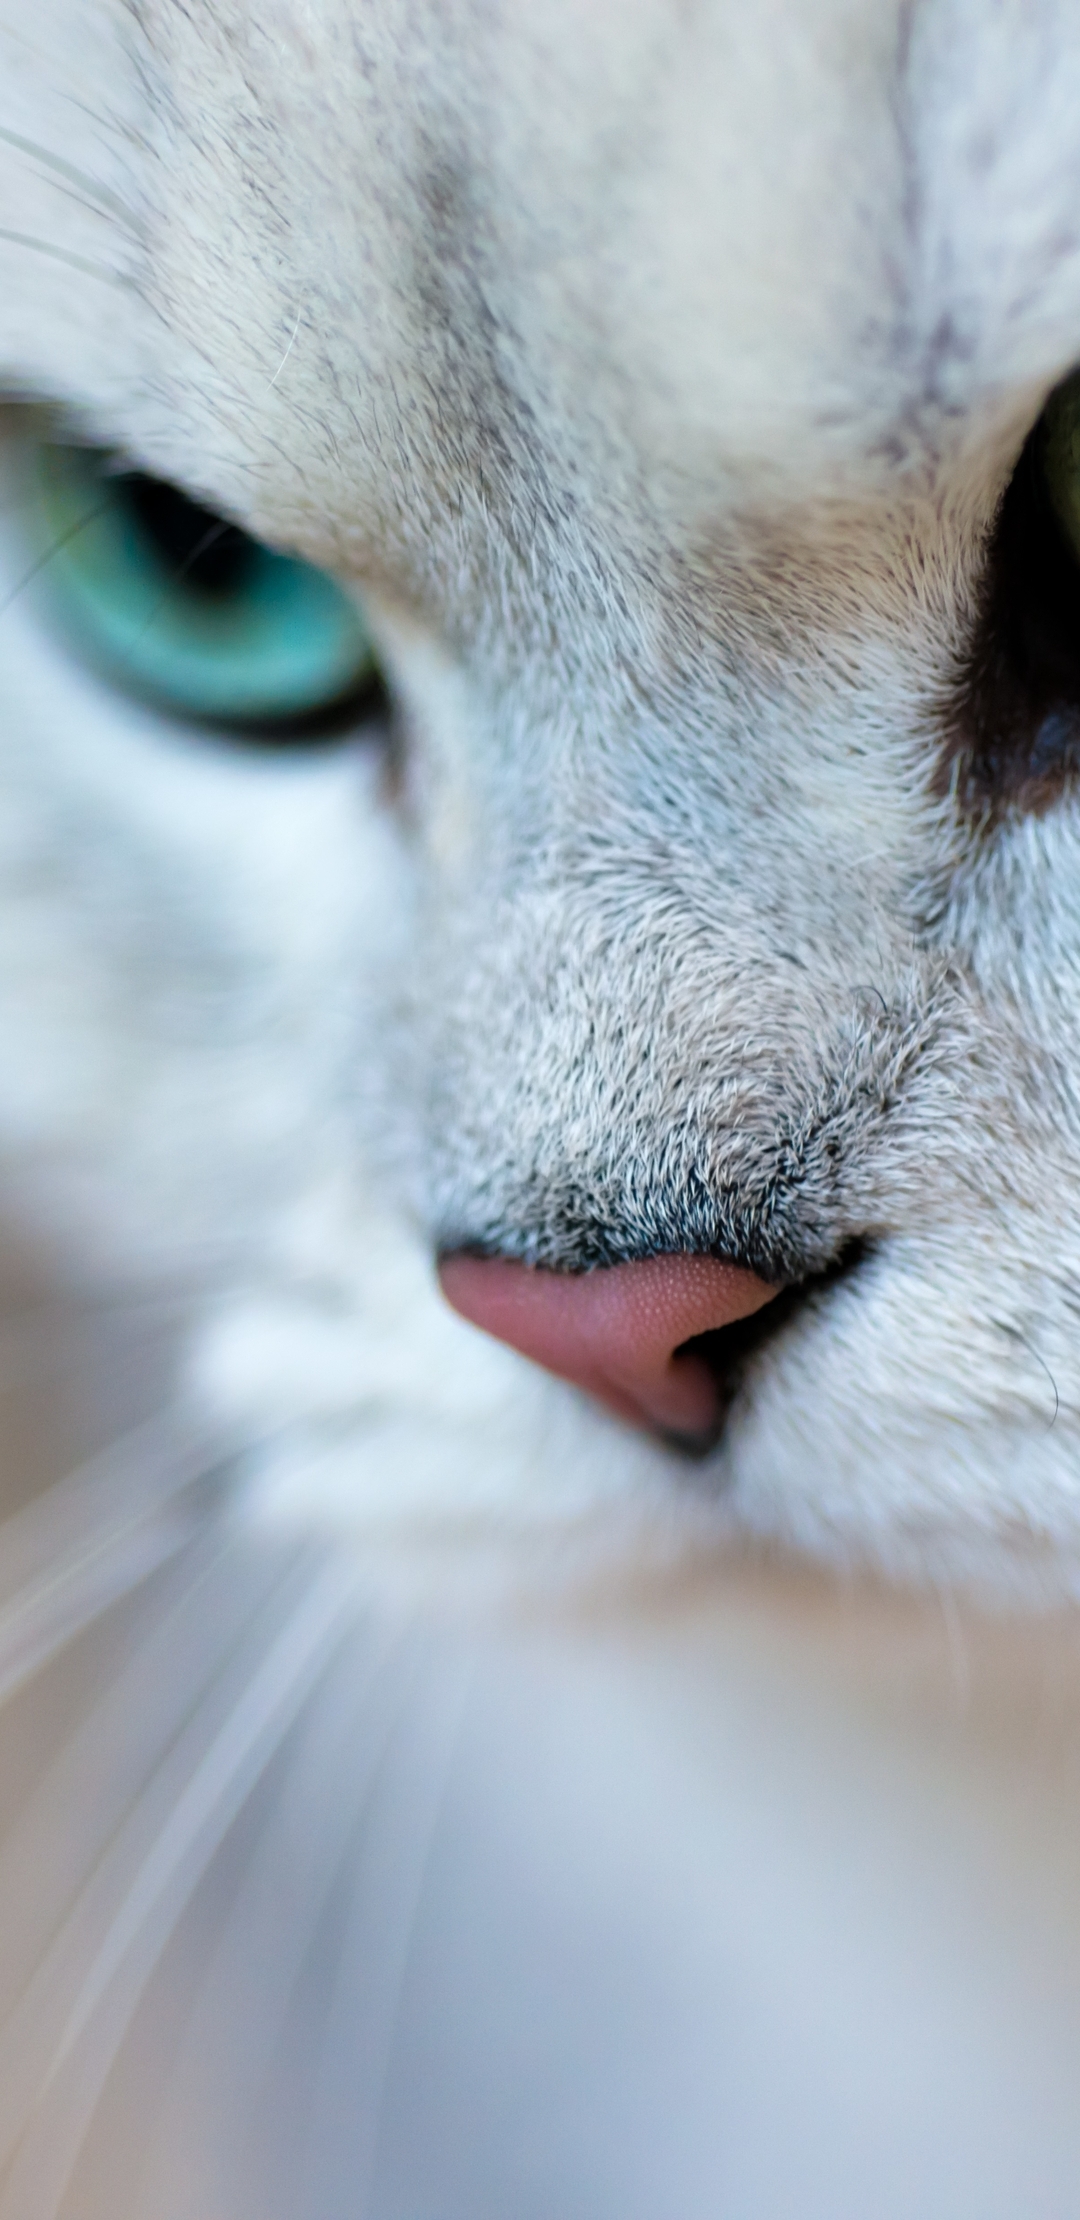 Image: Cat, look, eyes, mustache, nose